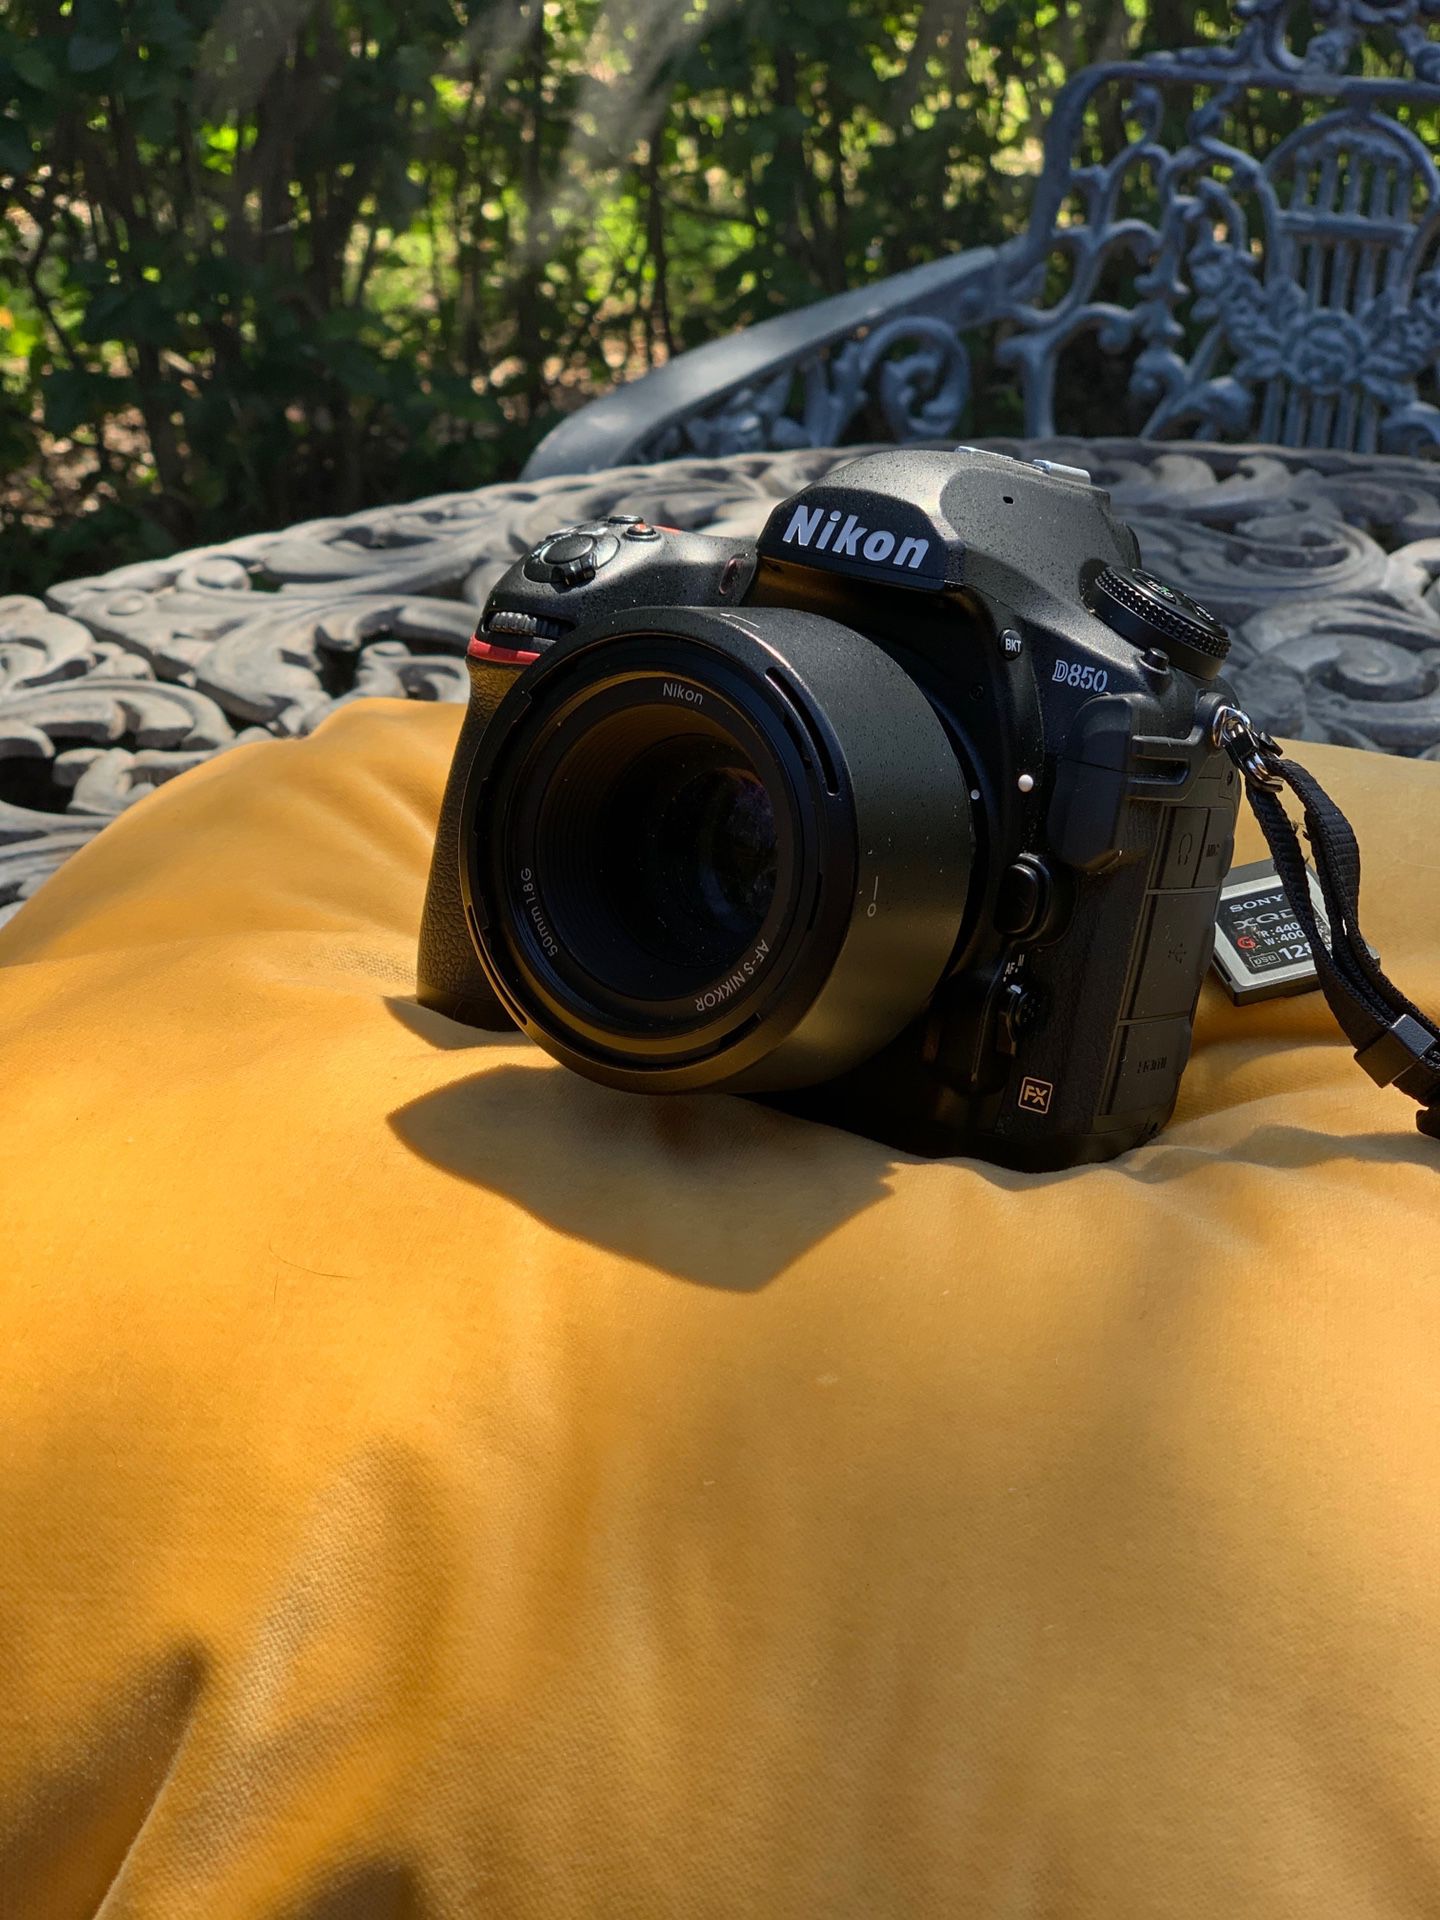 Nikon D 850, 50mm f/1.8g lens, Sony 120 gb series XQD Memory card